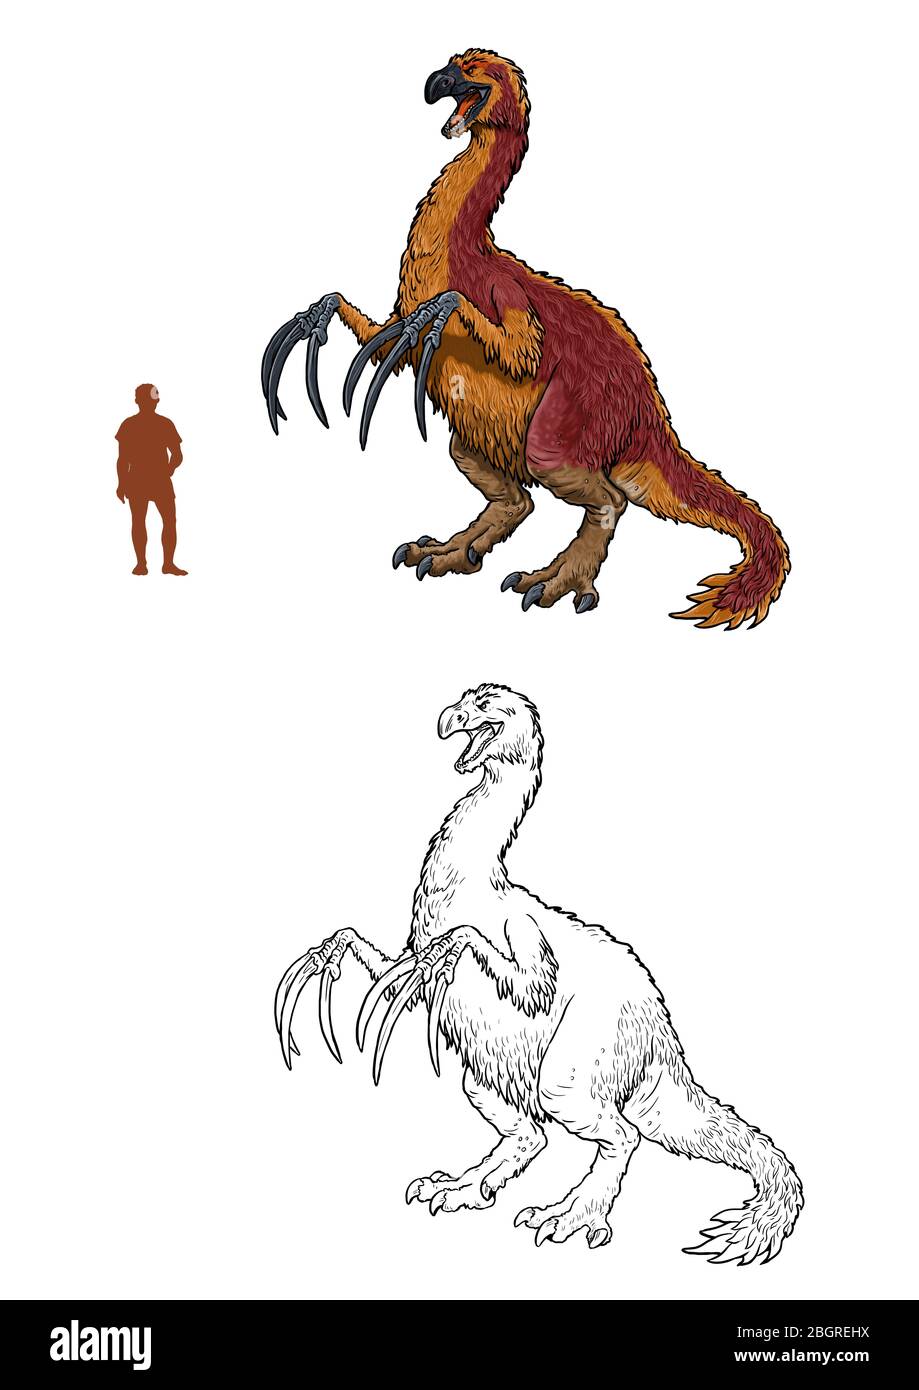 Herbivorous dinosaur - Therizinosaurus. Comparison between dinosaur and human. Dino coloring page. Stock Photo